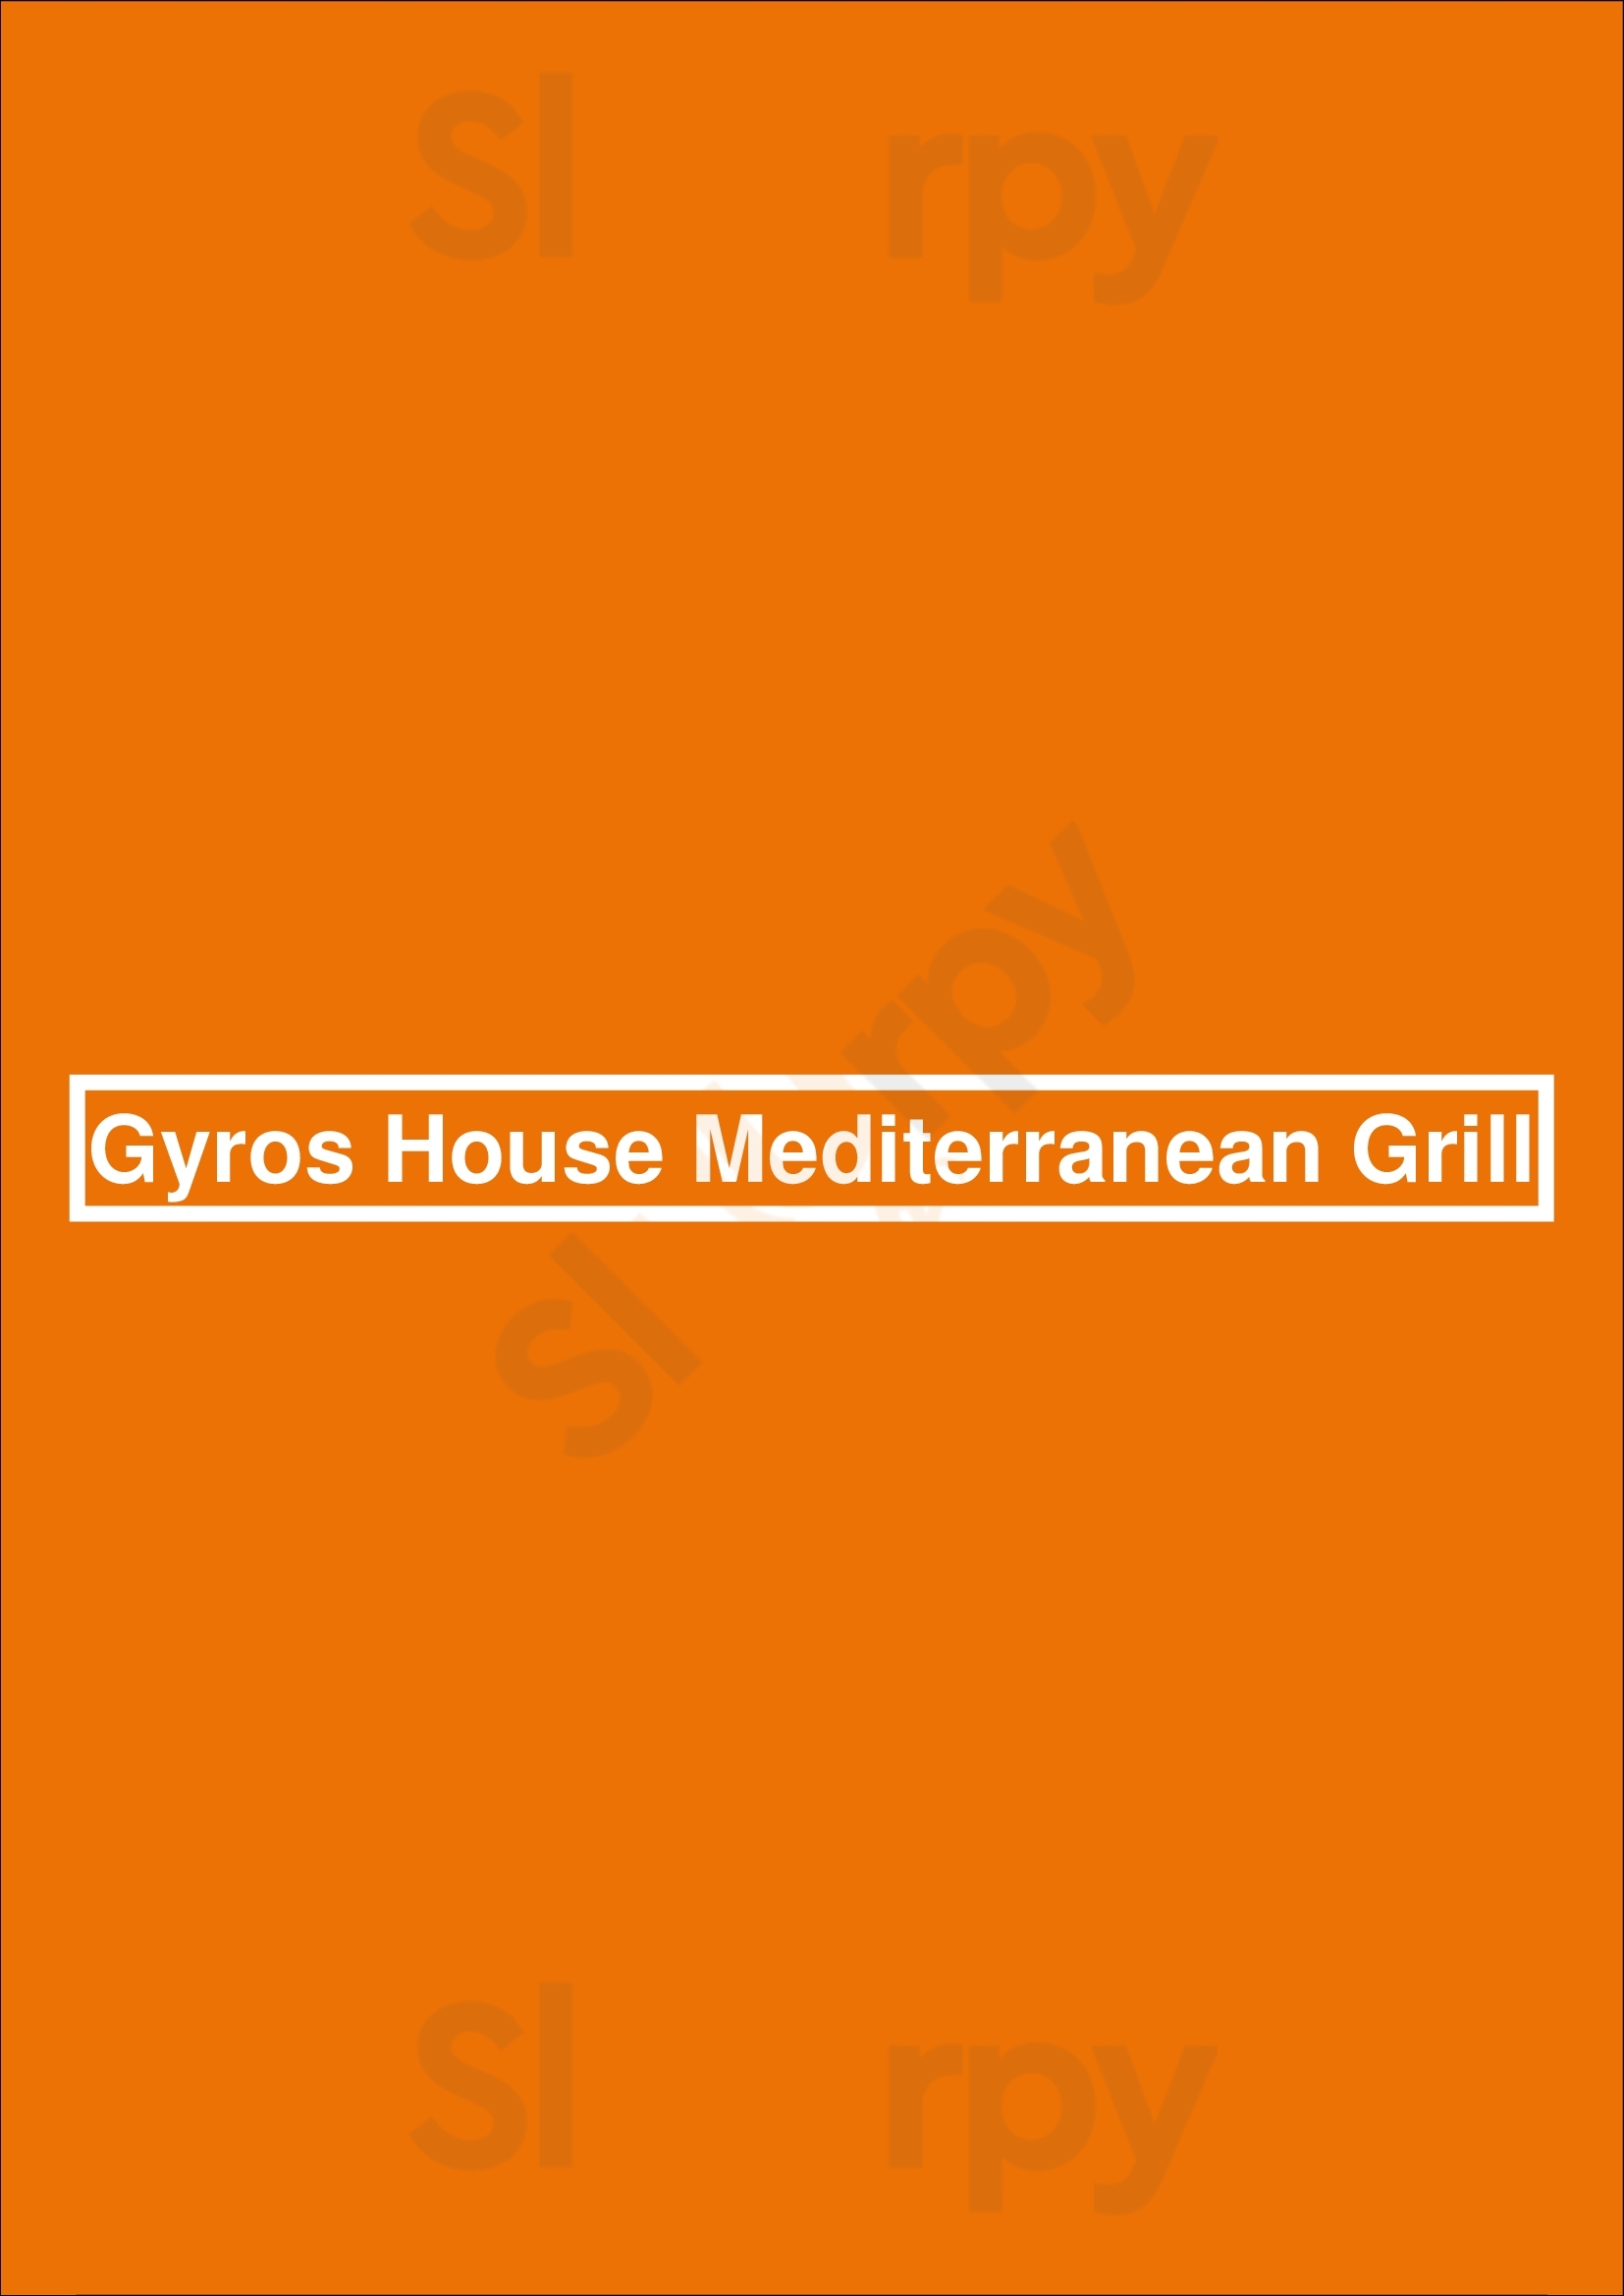 Gyros House Renton Menu - 1